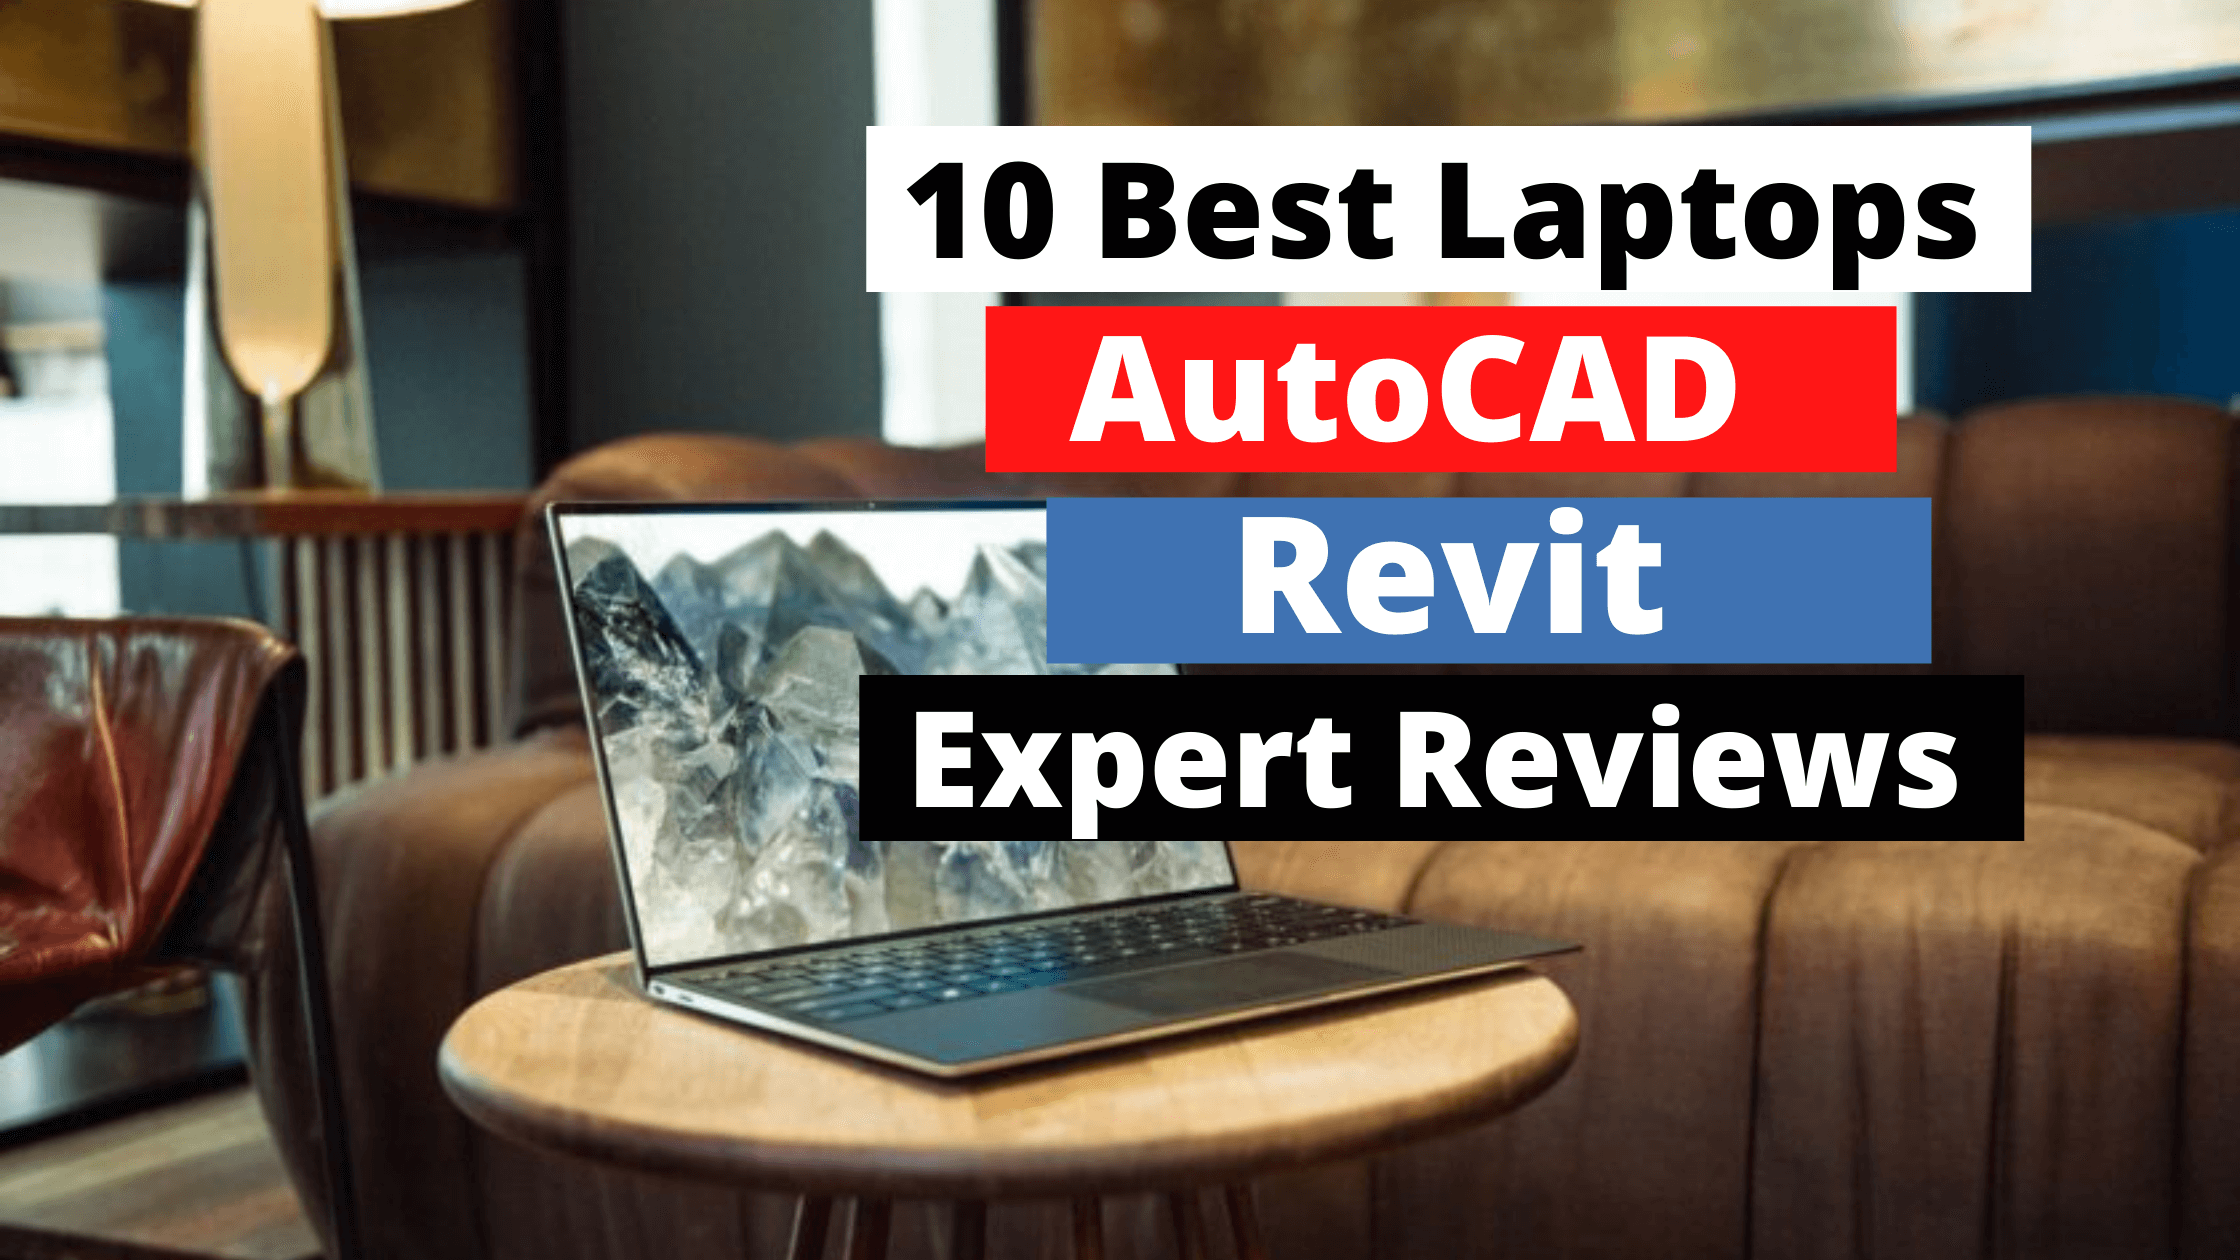 10 Best Laptops For AutoCAD And Revit